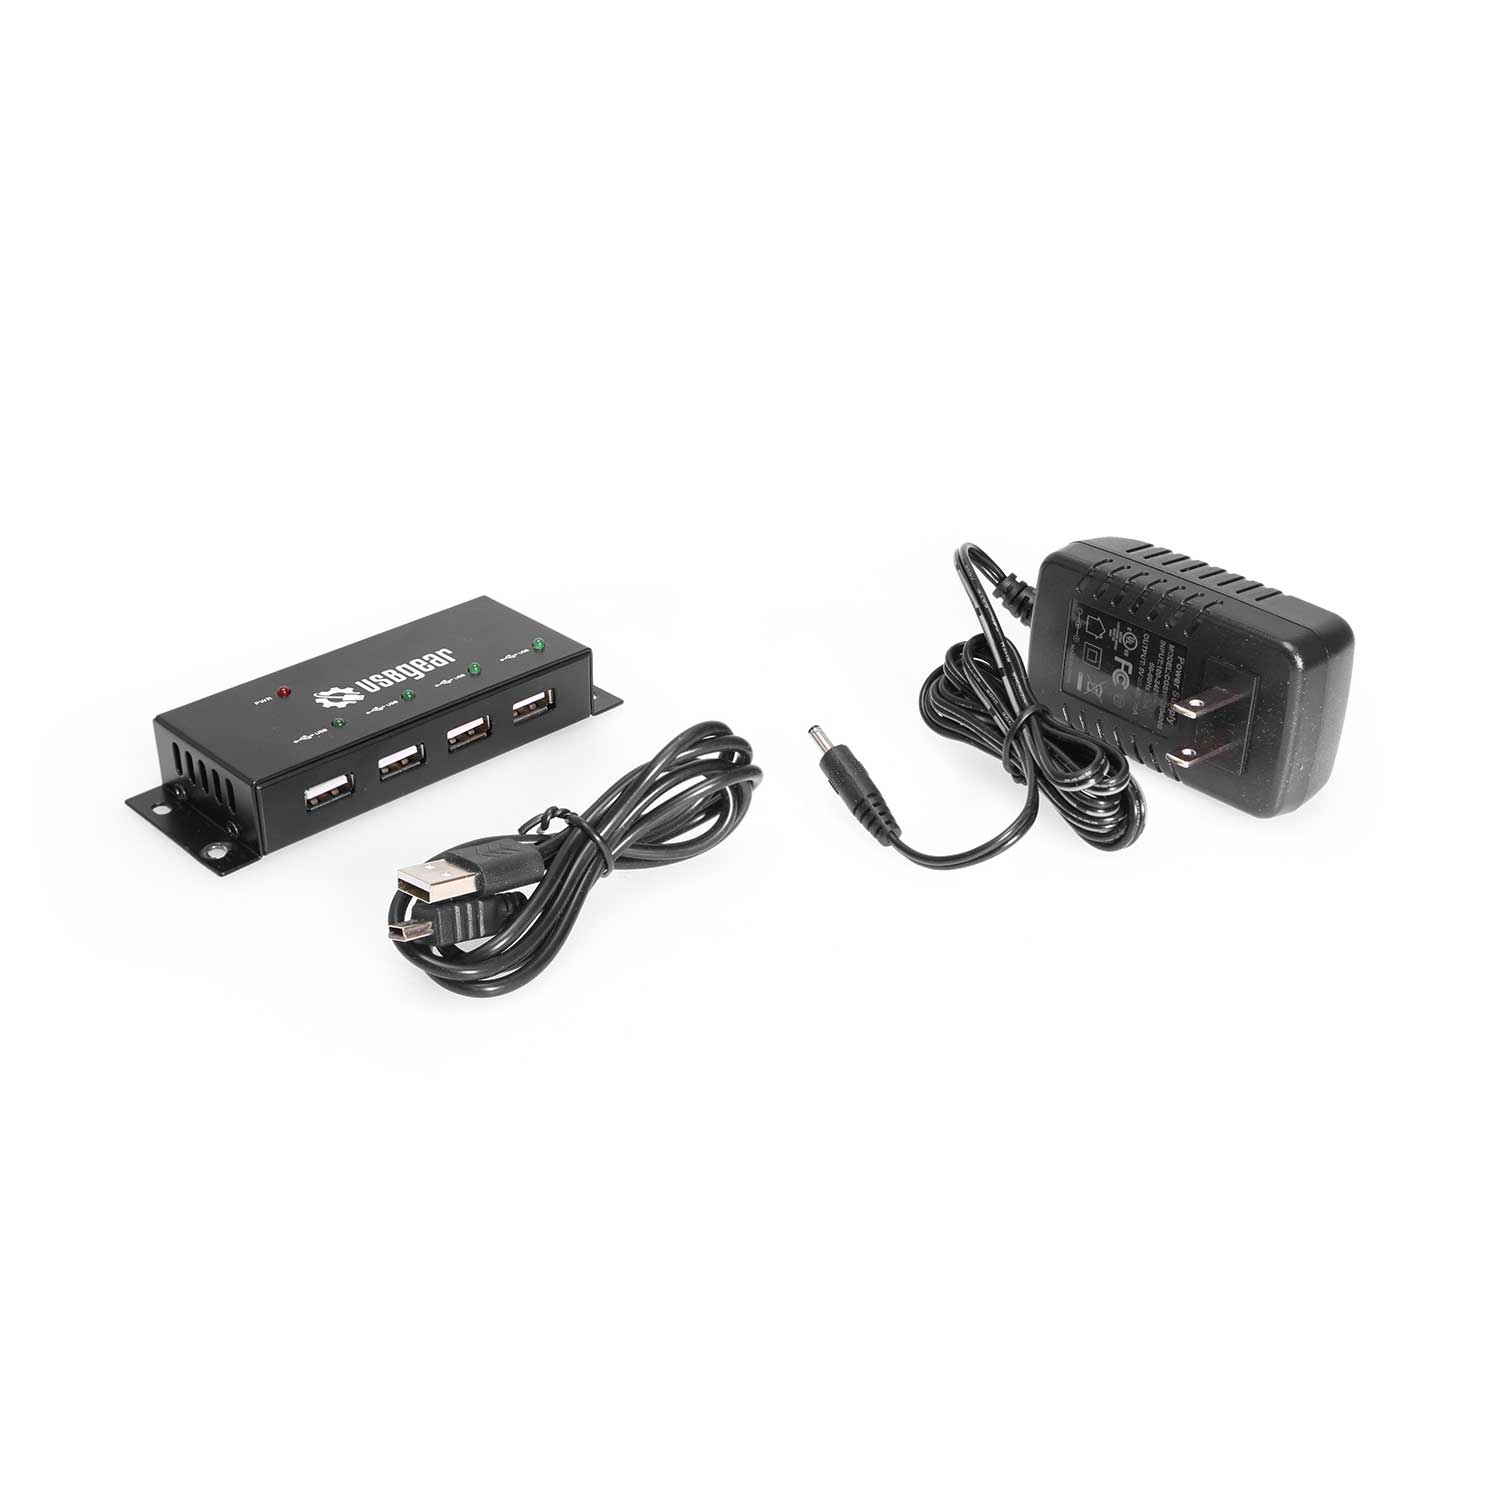 Cable Length 30cm Color : Black 4 USB 2.0 Hi-Speed Port HUYUNJIA-US Suitable for Tablet PC 4 Port USB 2.0 HUB